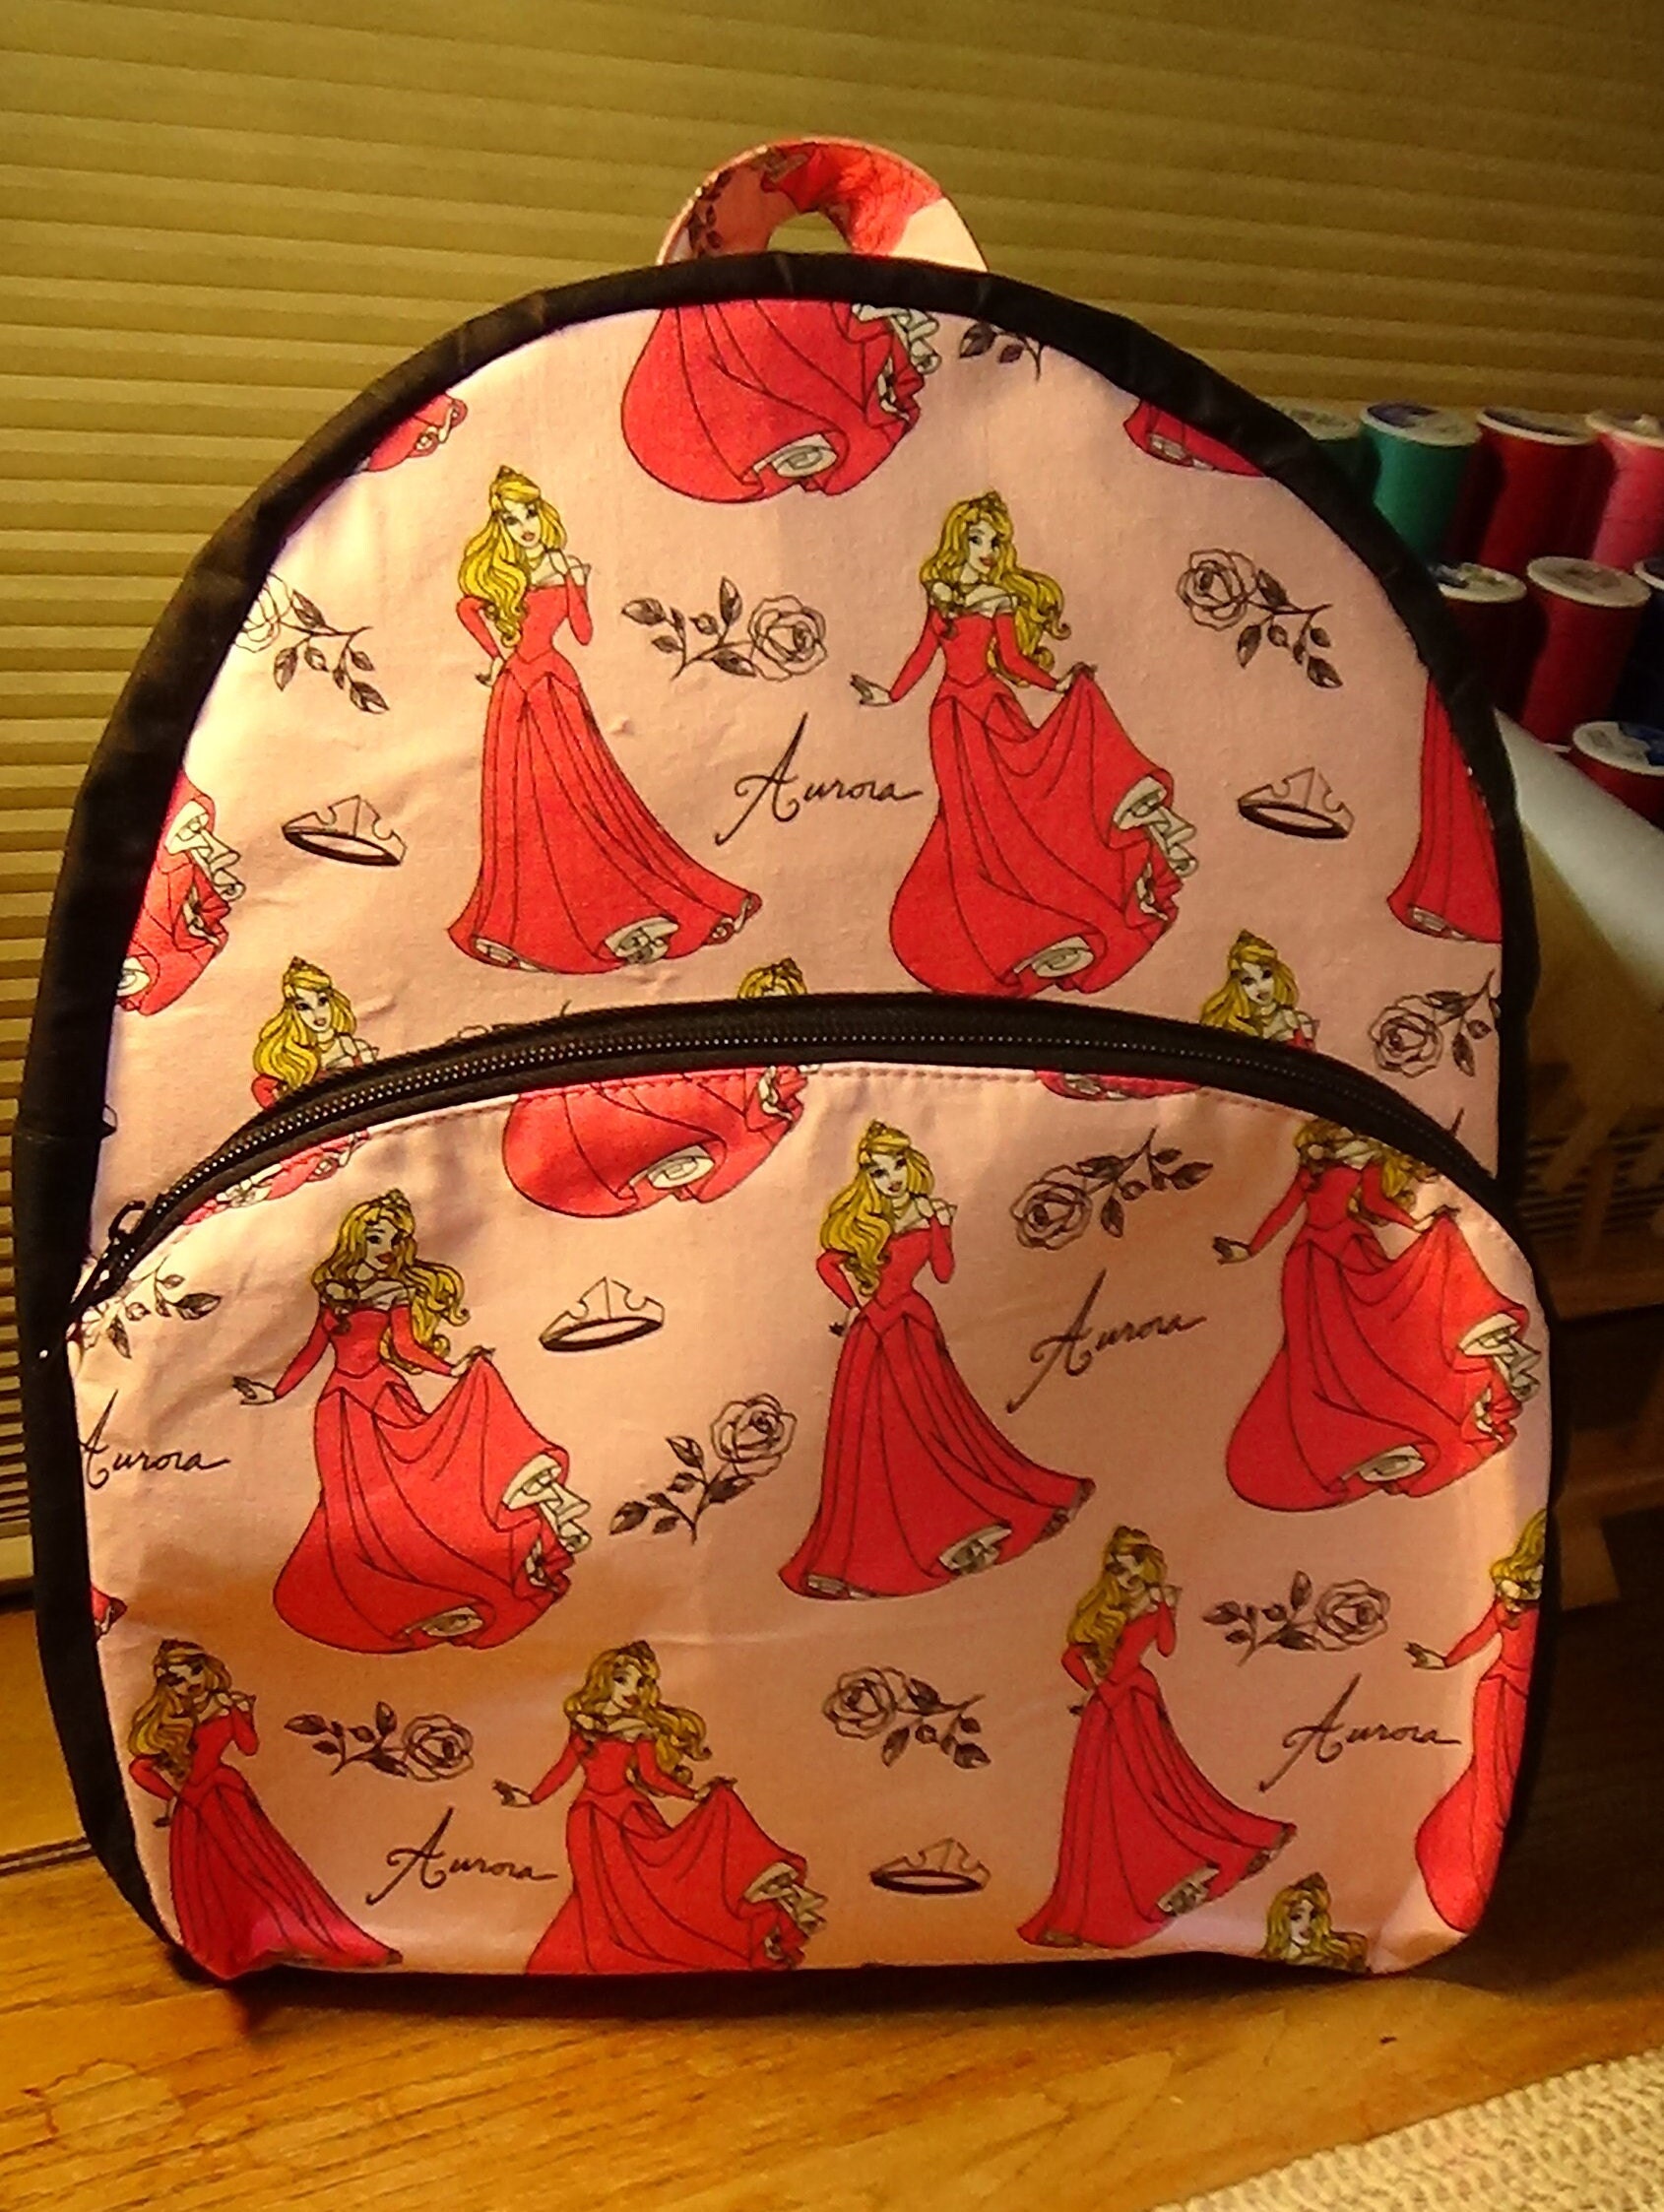 Disney Princess Sleeping Beauty aurora Girls Backpack 